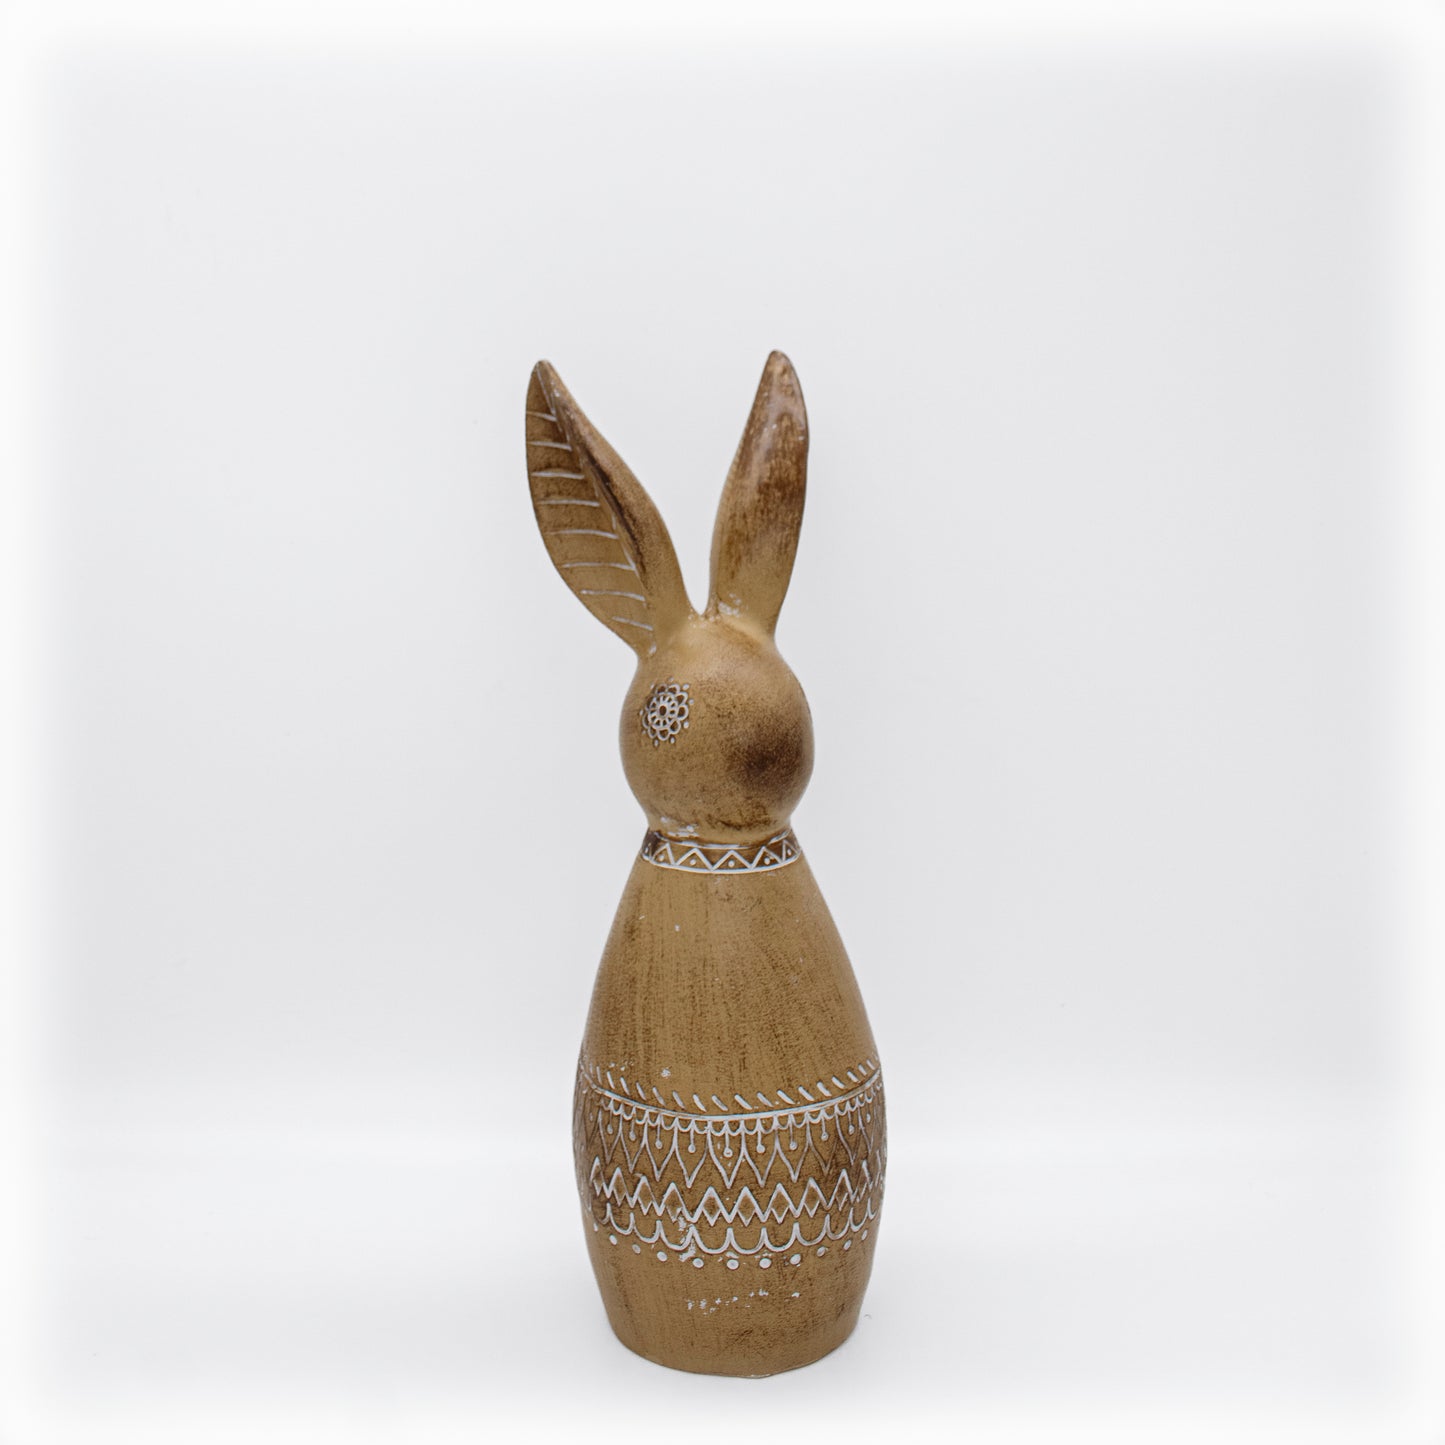 Tan Resin Carved Easter Bunnies